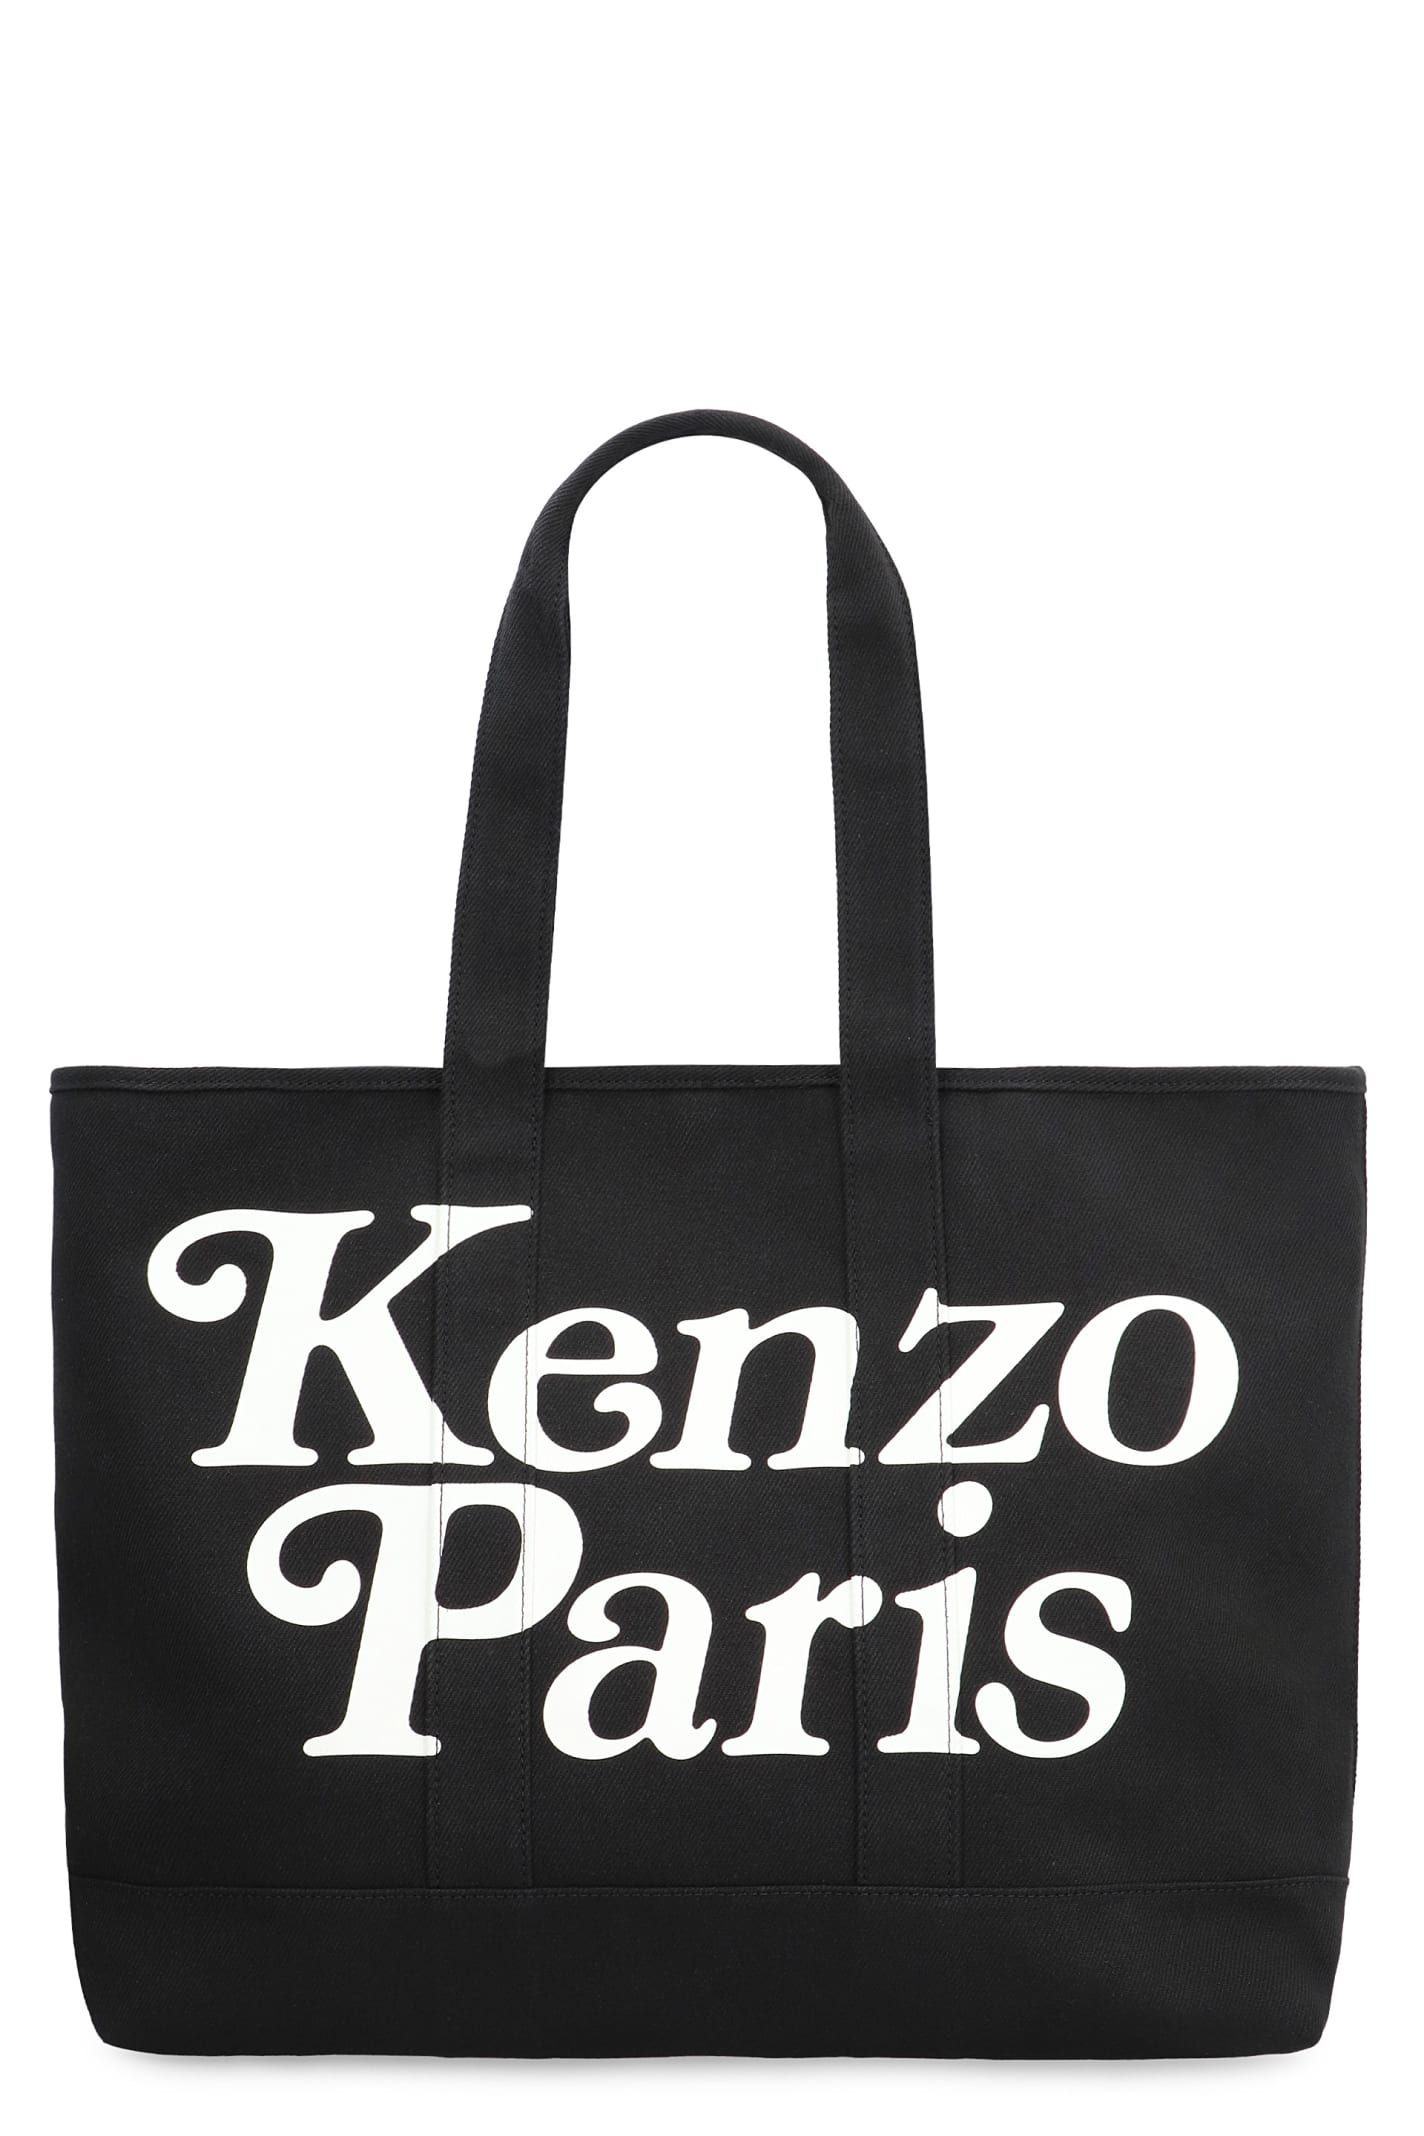 Kenzo Canvas Tote Bag In Black